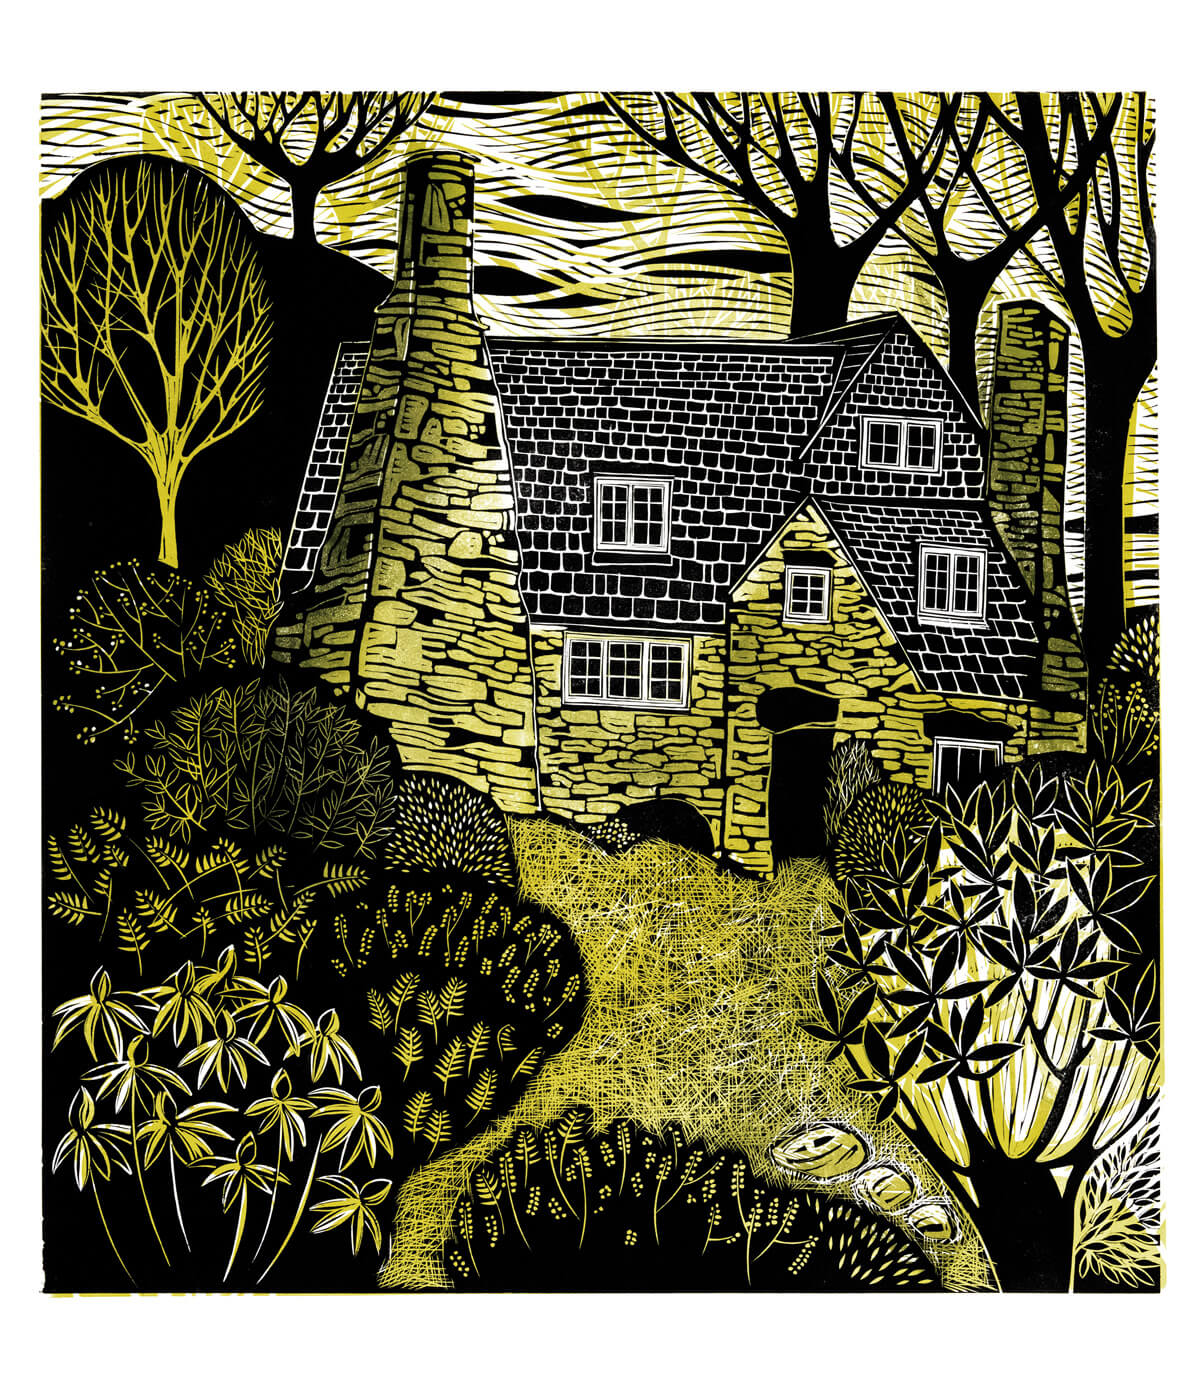 Stoneywell, a linocut print by Sarah Kirby